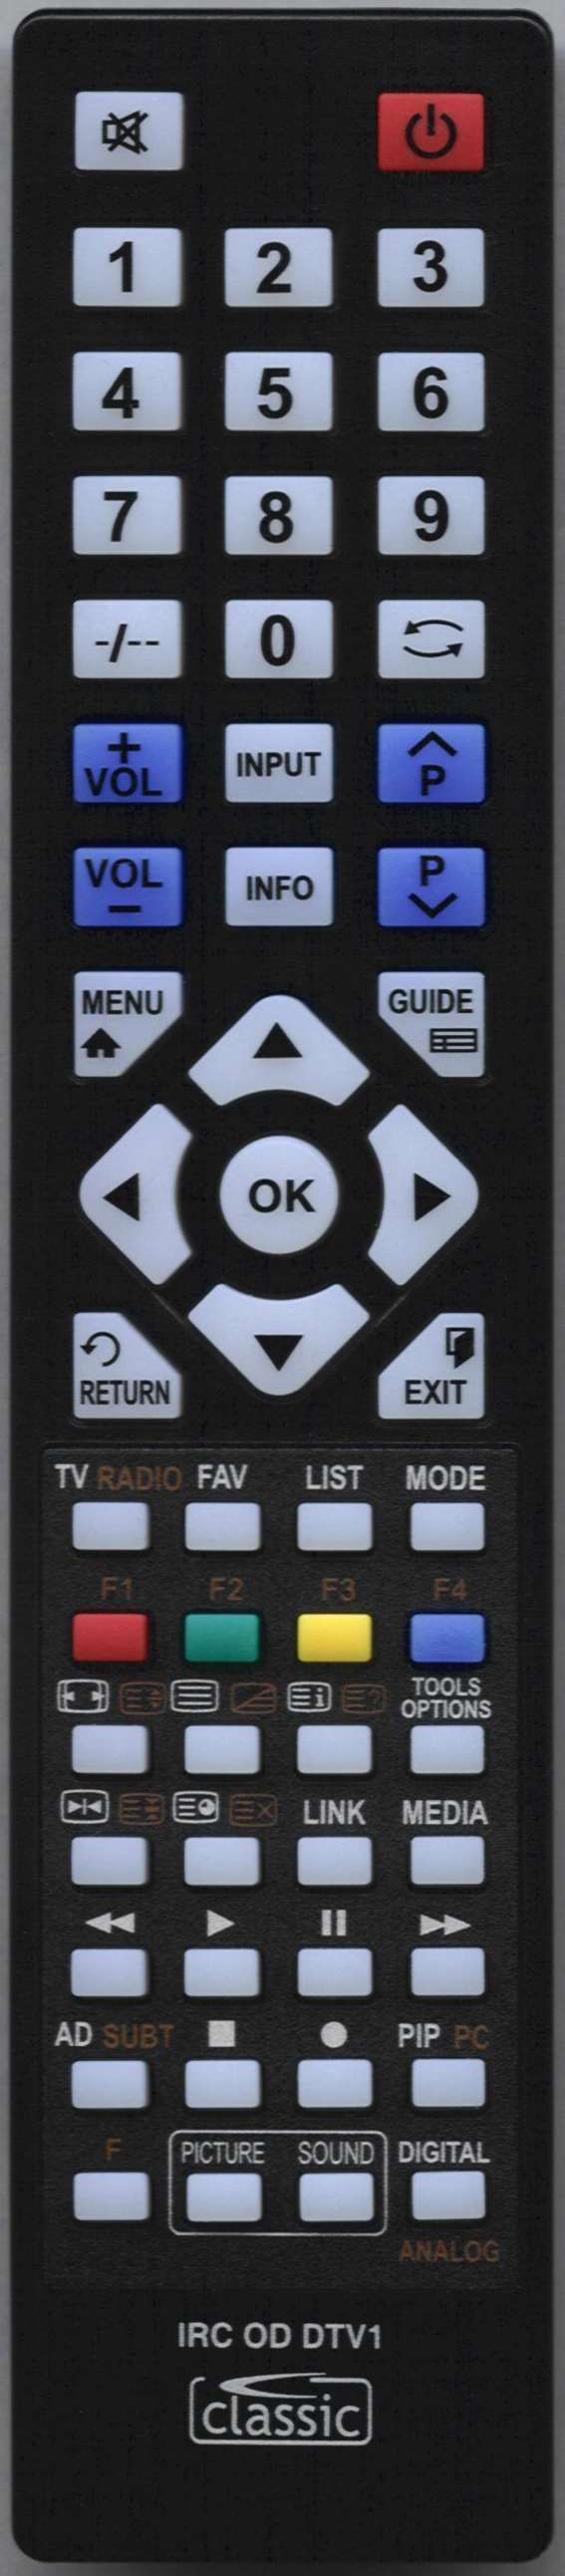 Beko 206157 NS Remote Control